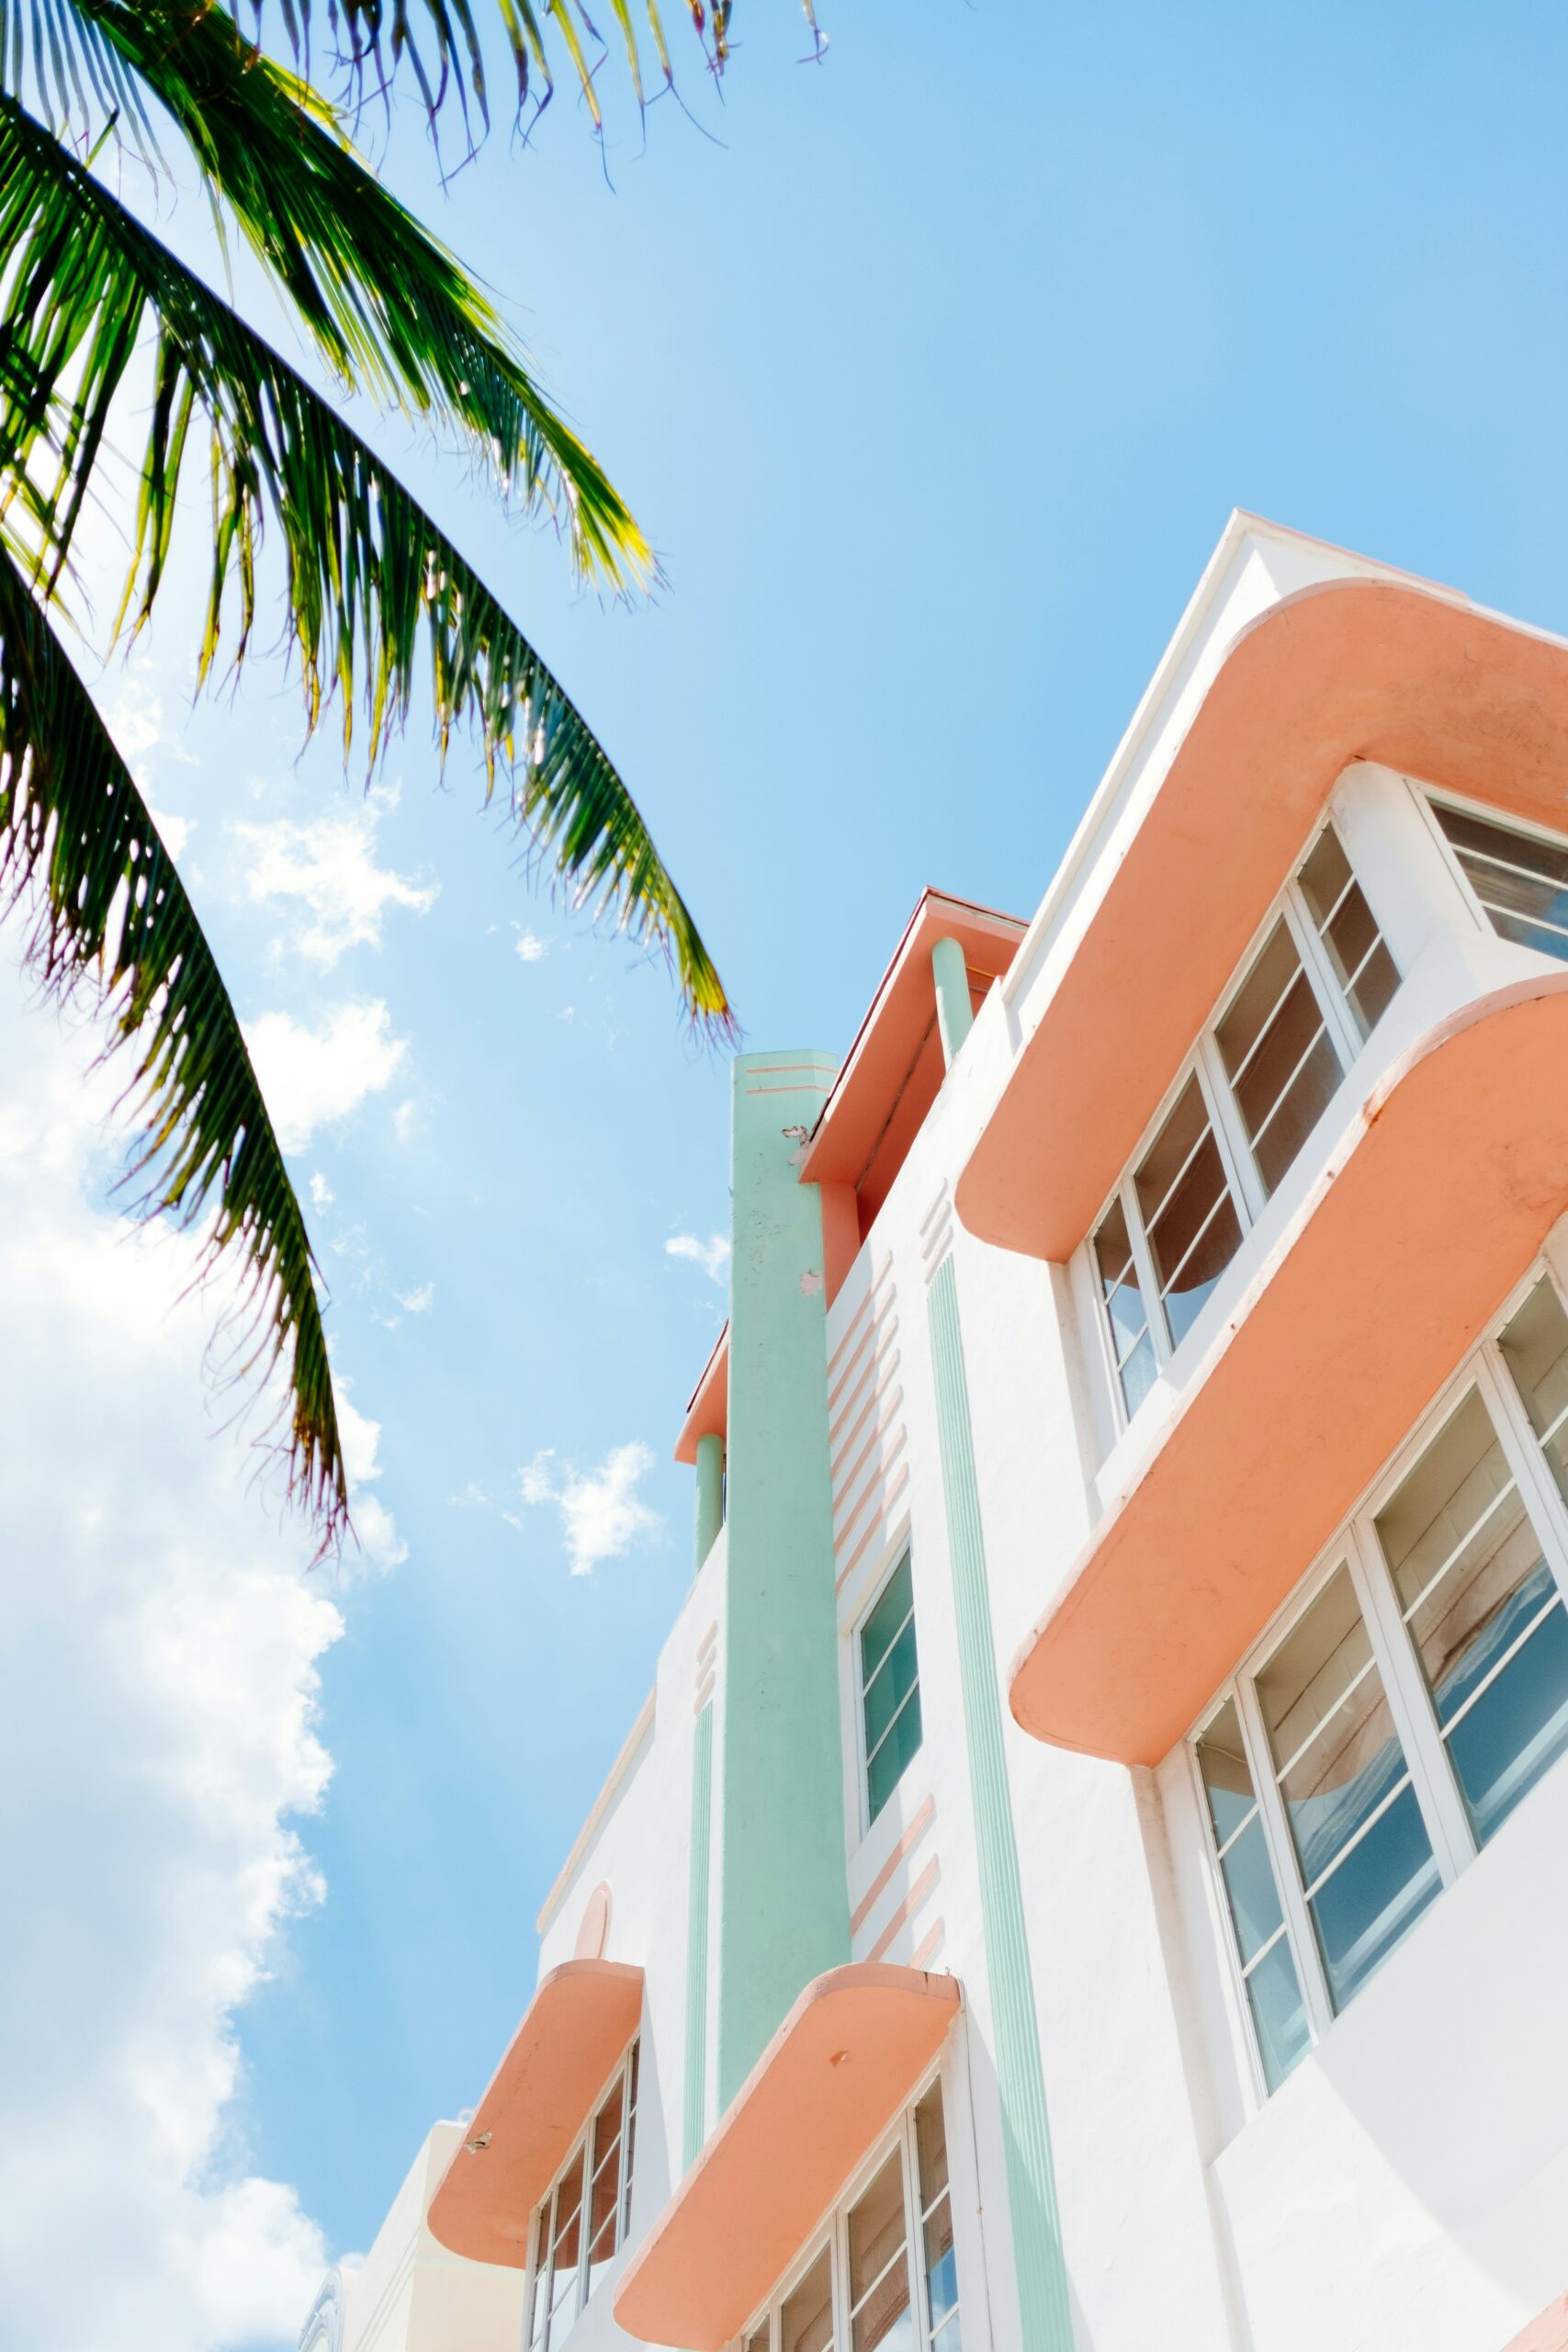 Art Deco Buildings in Miami